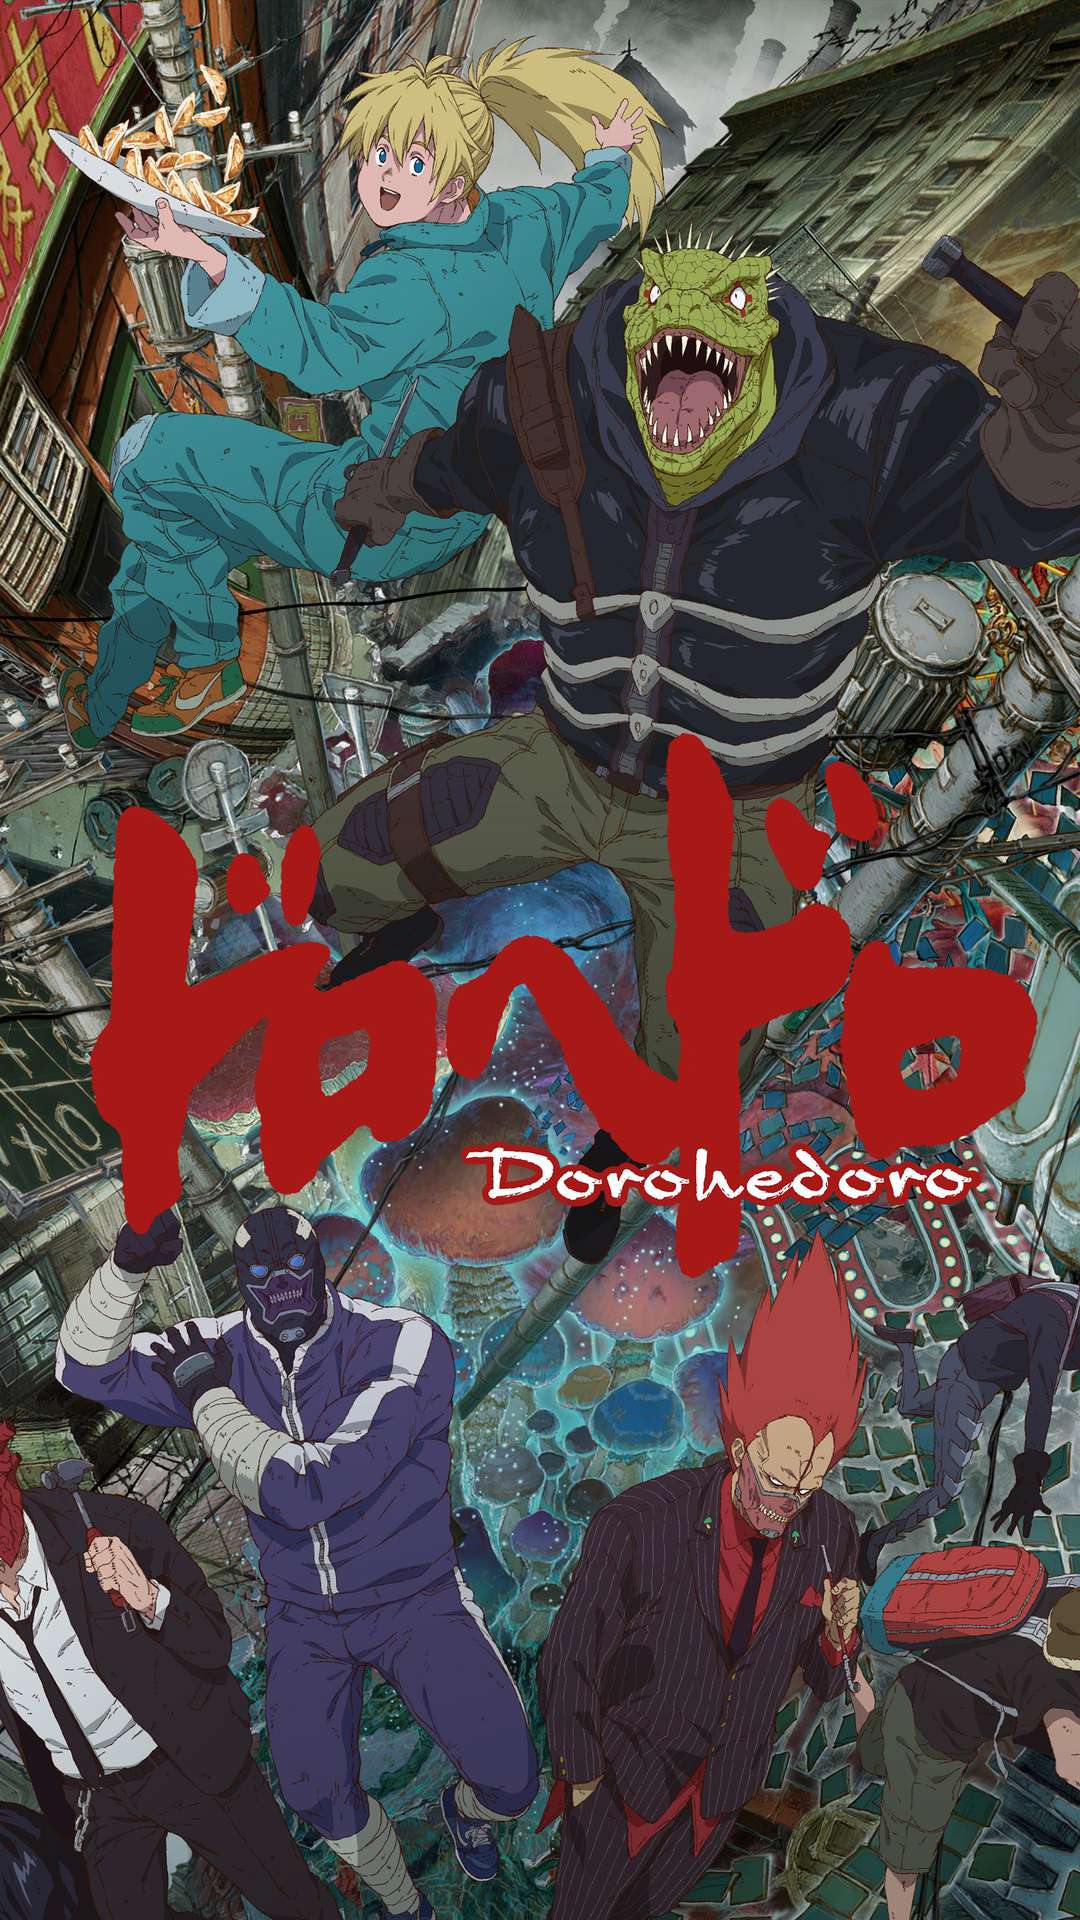 Dorohedoro  Other  Anime Background Wallpapers on Desktop Nexus Image  2605510